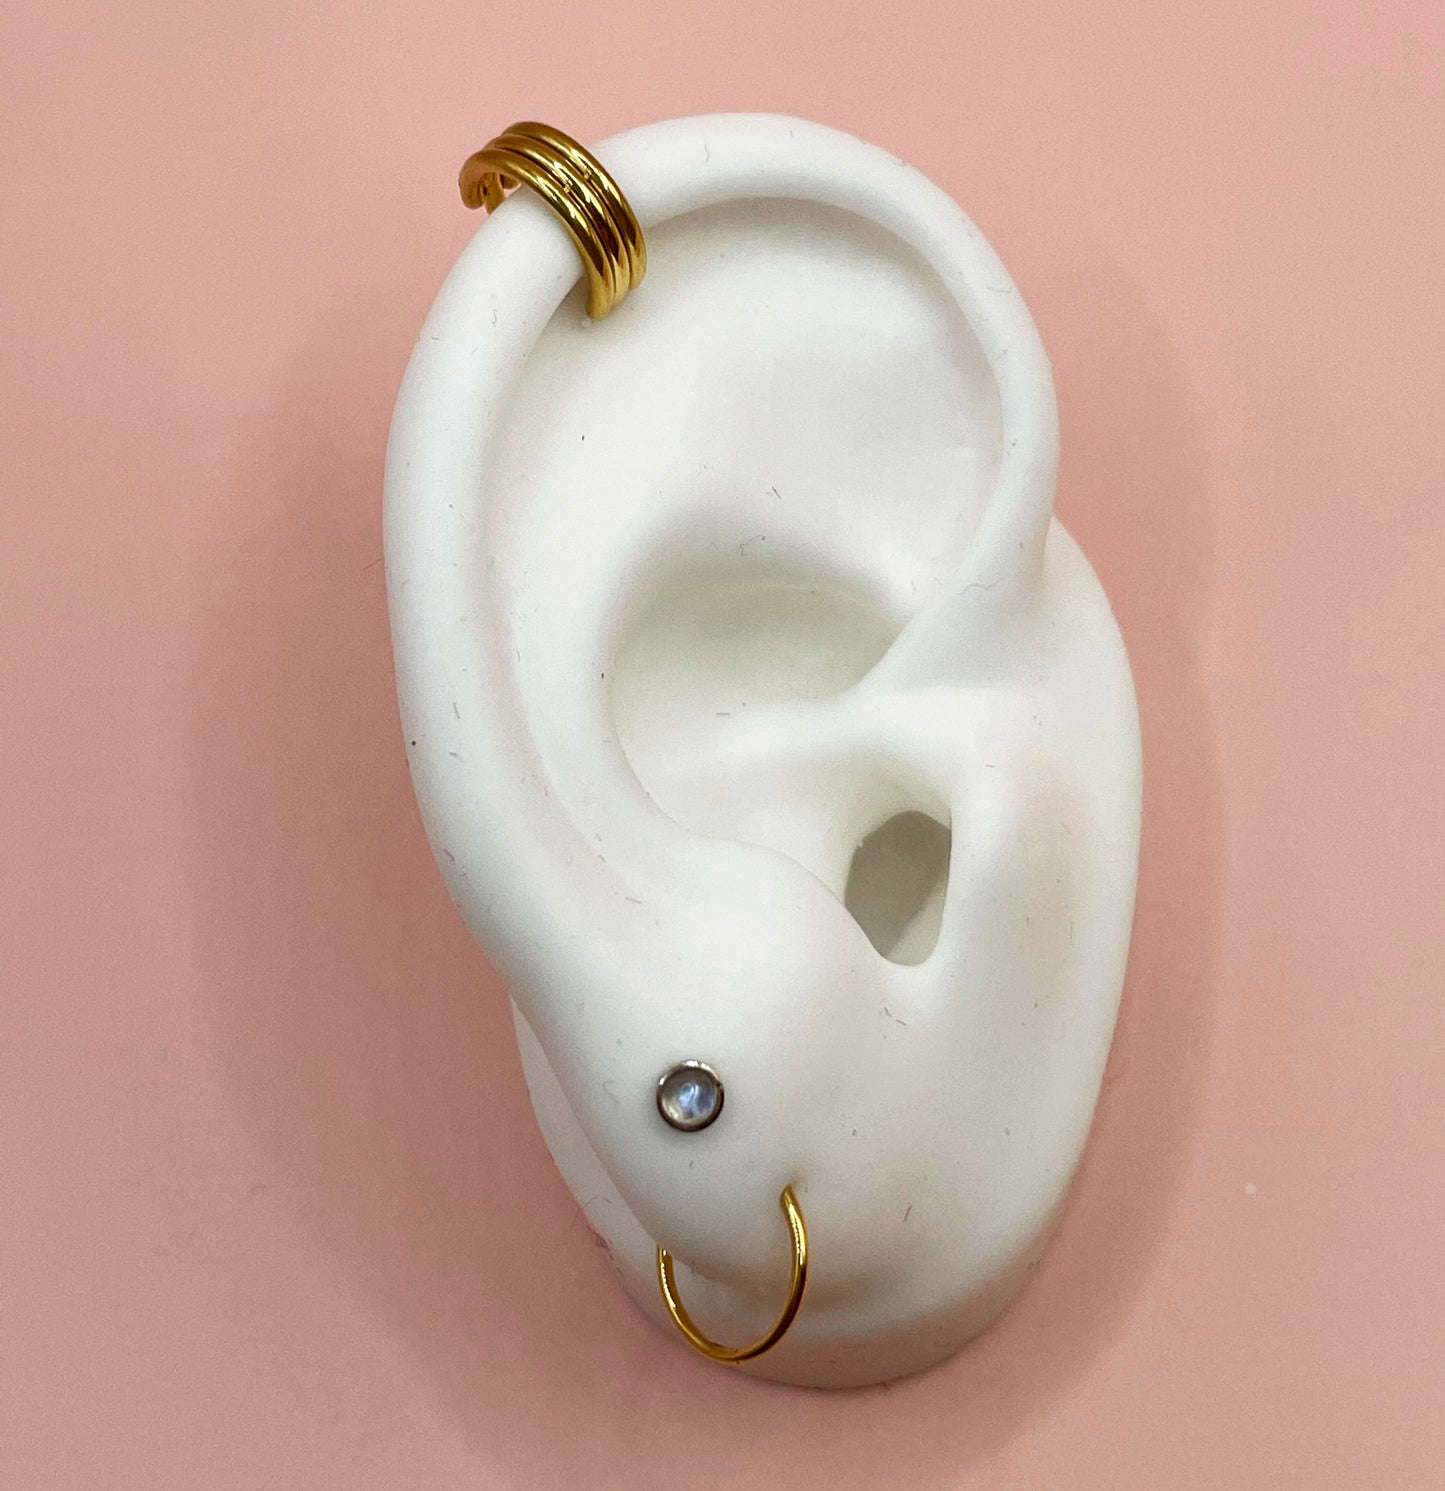 Bezel Set Gem | Titanium Threadless Top For Nose, Ears & Lip - Avanti Body Jewelry